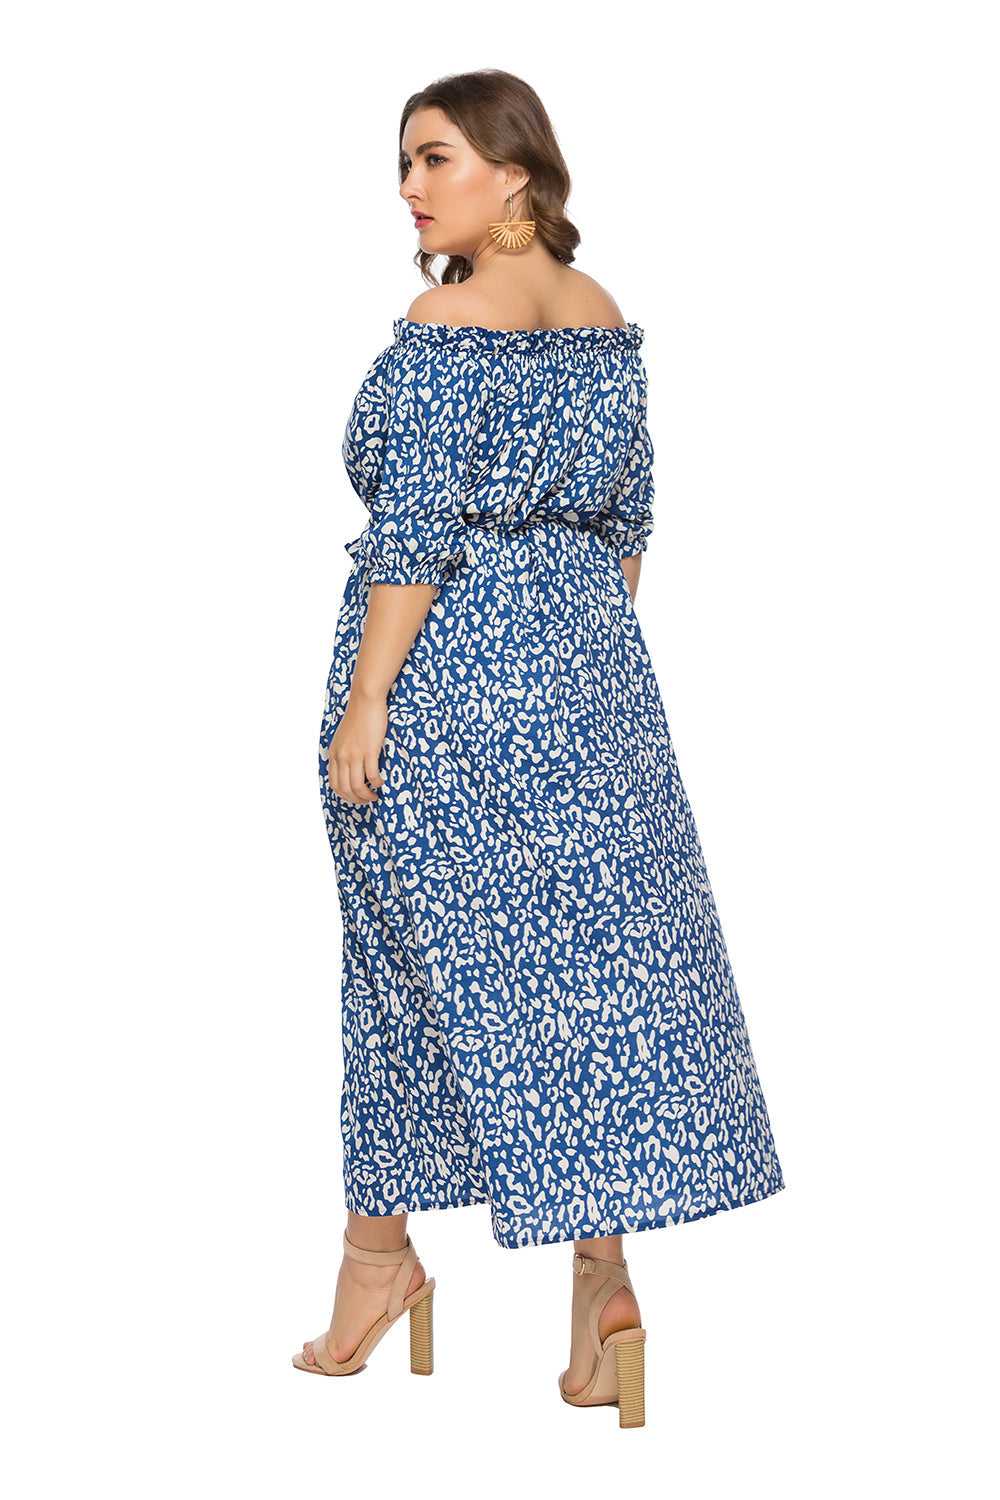 Fashion Srping Summer shoulder less collar leopard print split large size dress beach holiday long skirt plus size Sai Feel